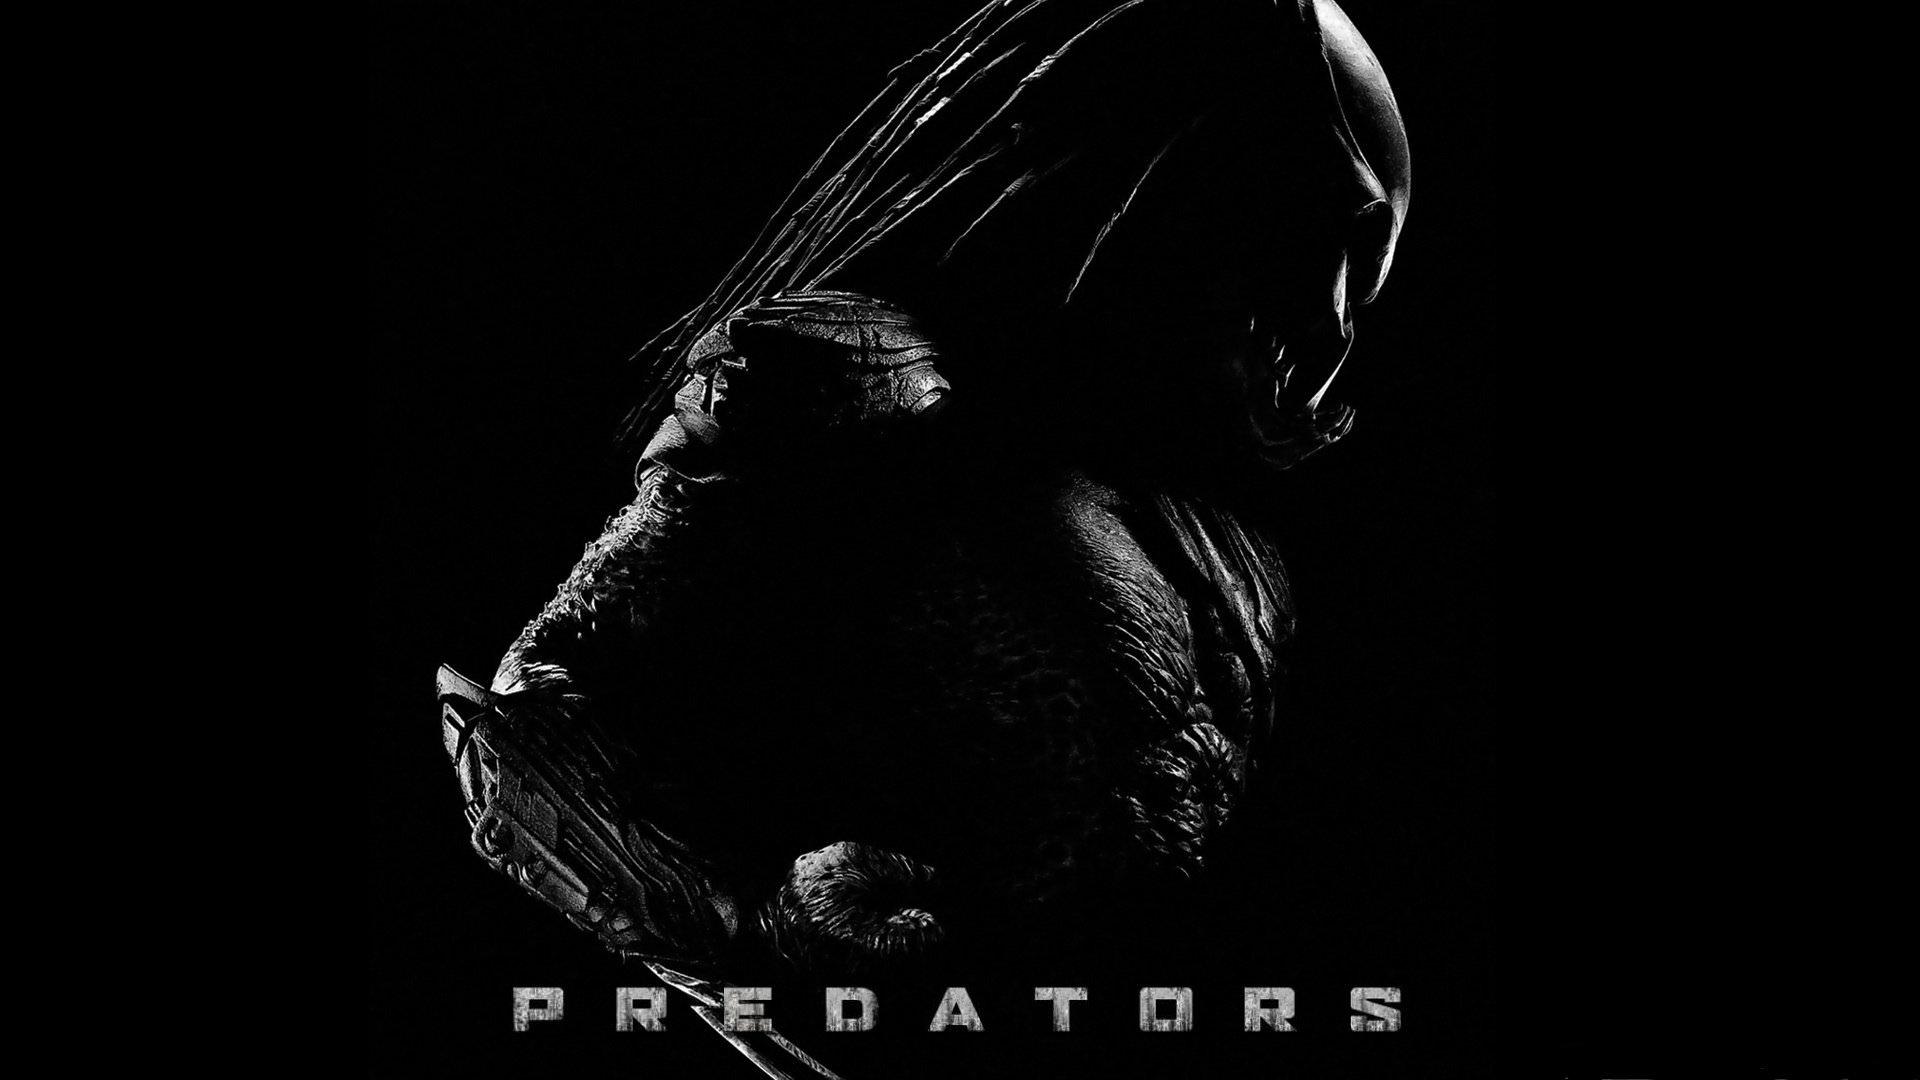 Predators wallpaper HD for desktop background